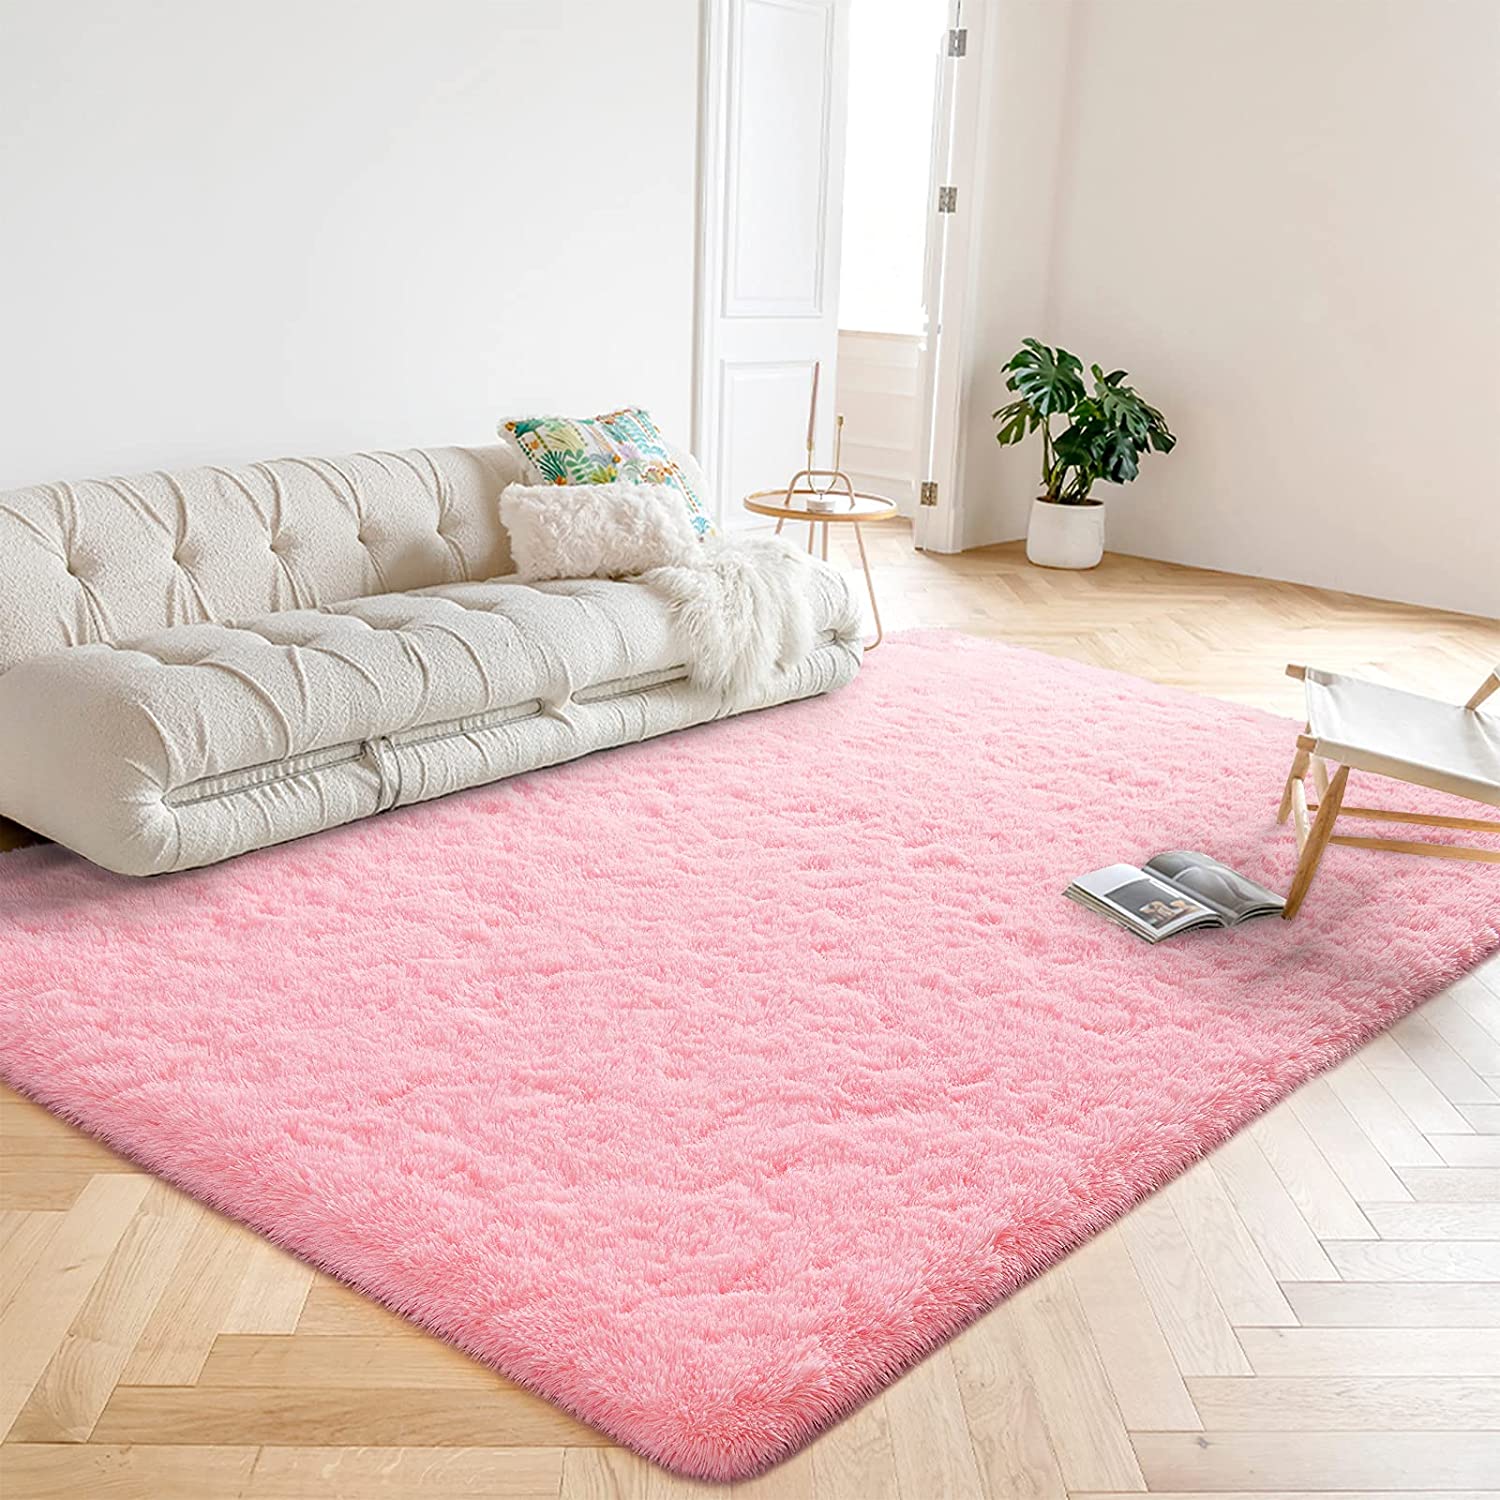 Lochas Soft Indoor Modern Area Rugs Fluffy Living Room Carpets for Children Bedroom Home Decor Nursery Rug 4' x 5.3', Pink - image 3 of 7